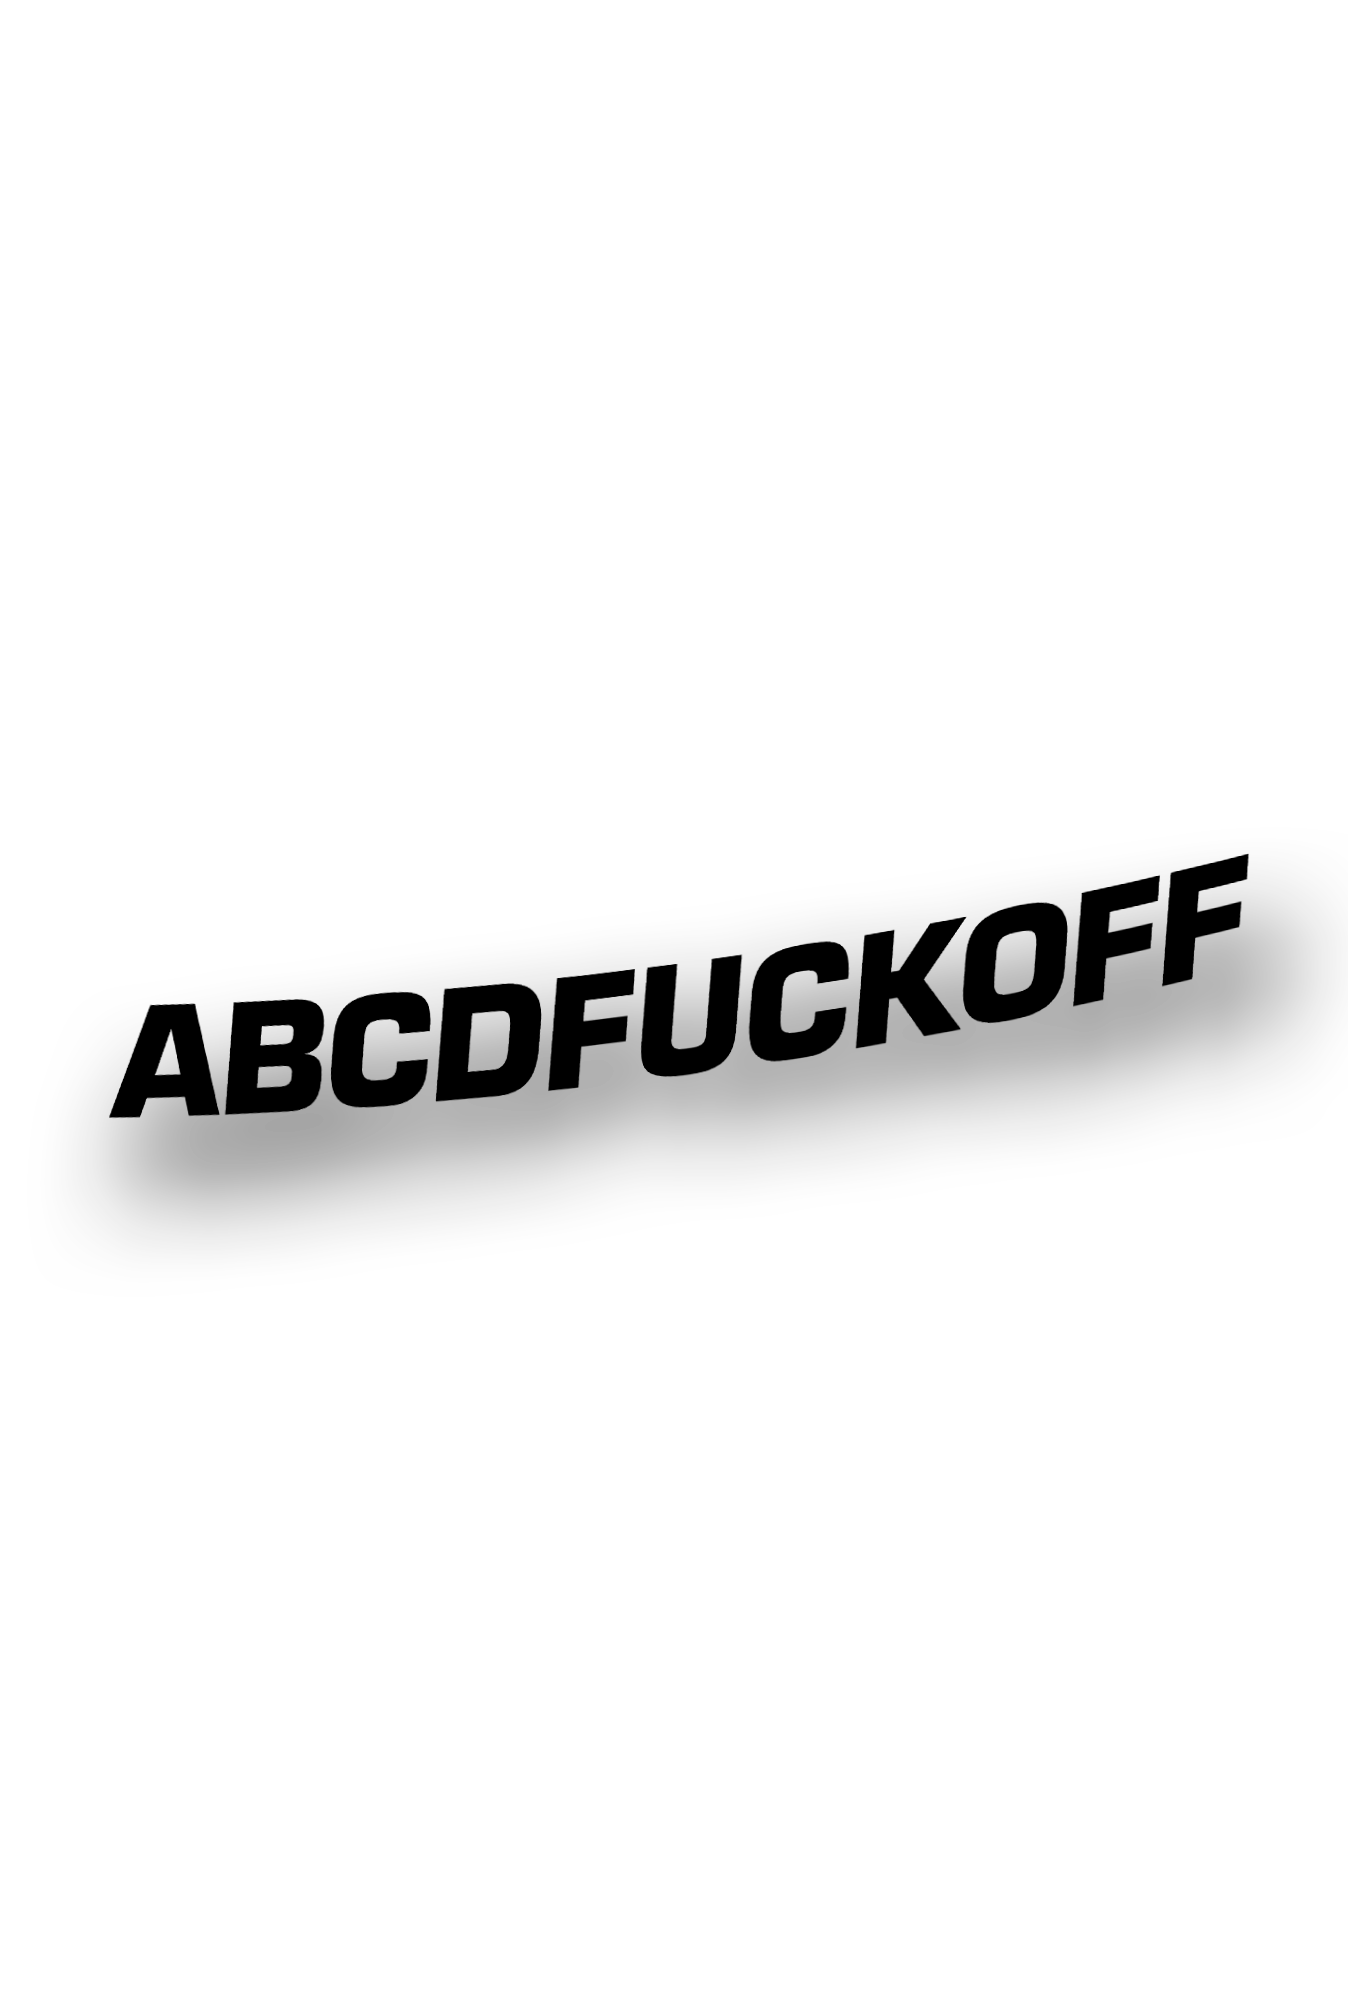 ''ABCDFUCKOFF'' - Plotted Vinyl Sticker